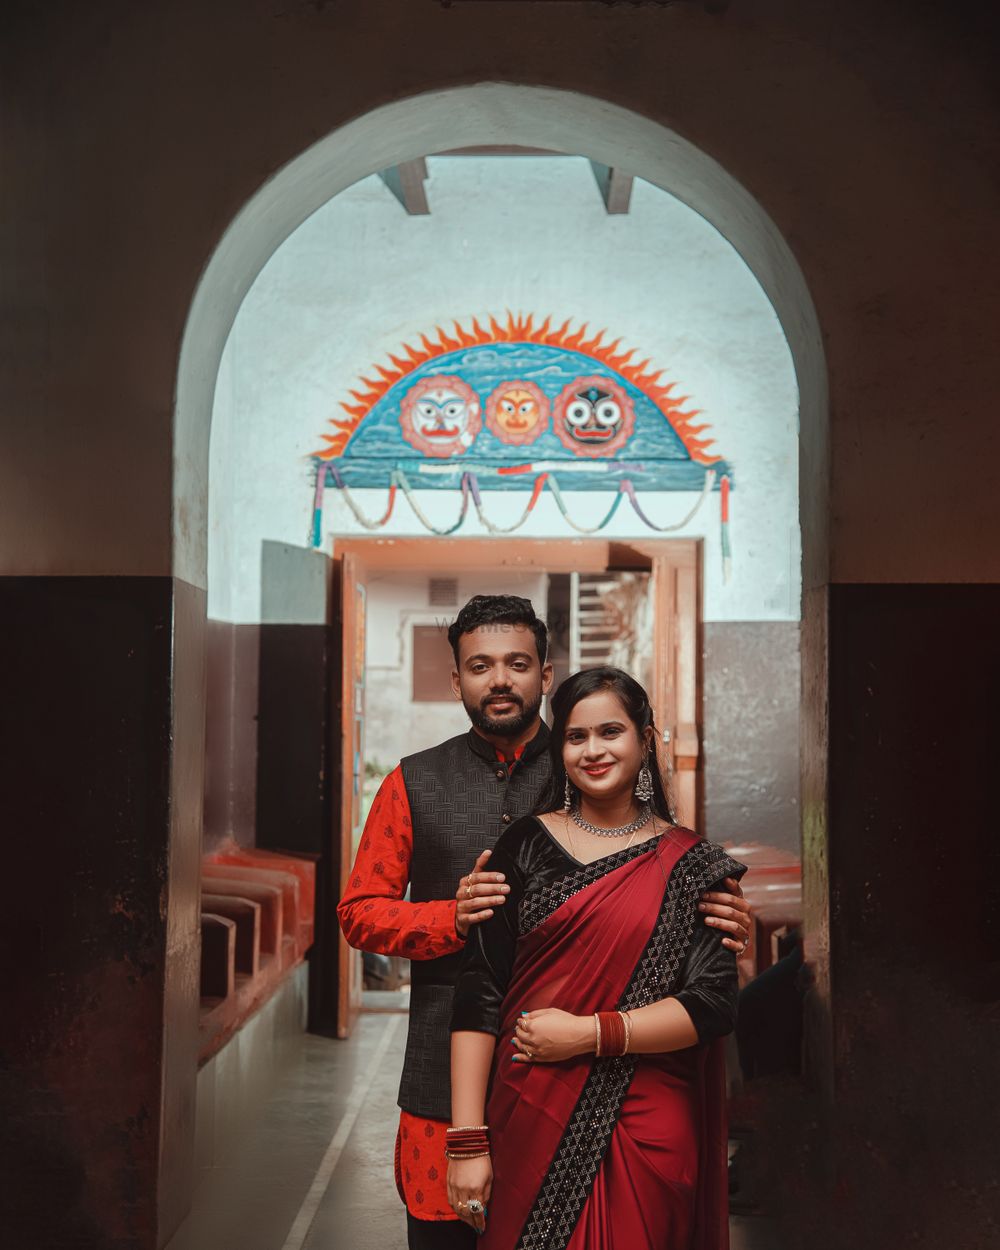 Photo From Anshupallav & Aishwarya Pre-Wedding - By DK Photography